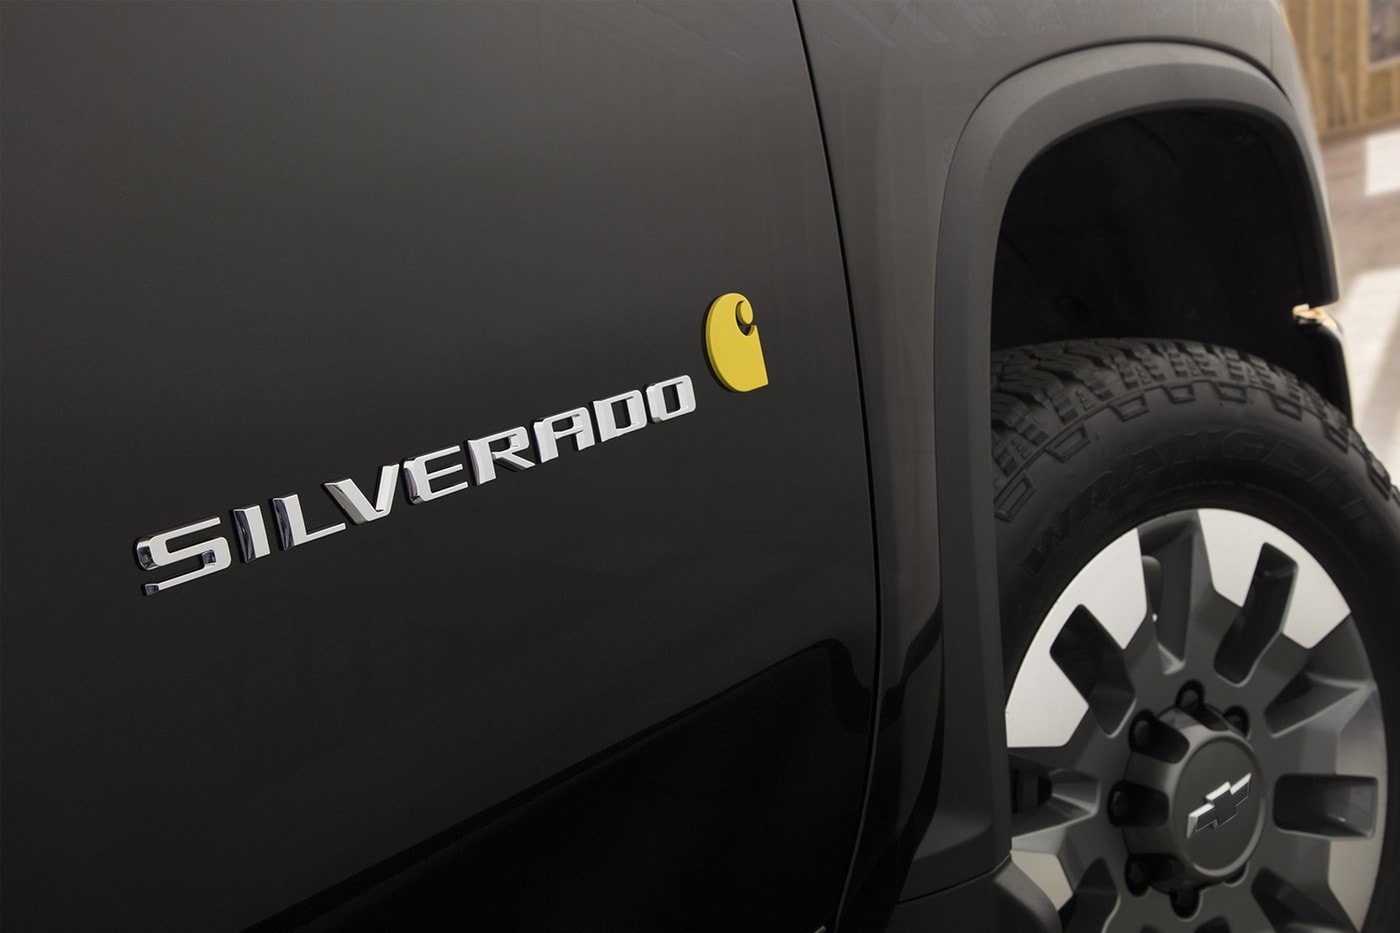 Chevrolet x Carhartt 聯手打造 2021 年式樣 Silverado HD 別注車型